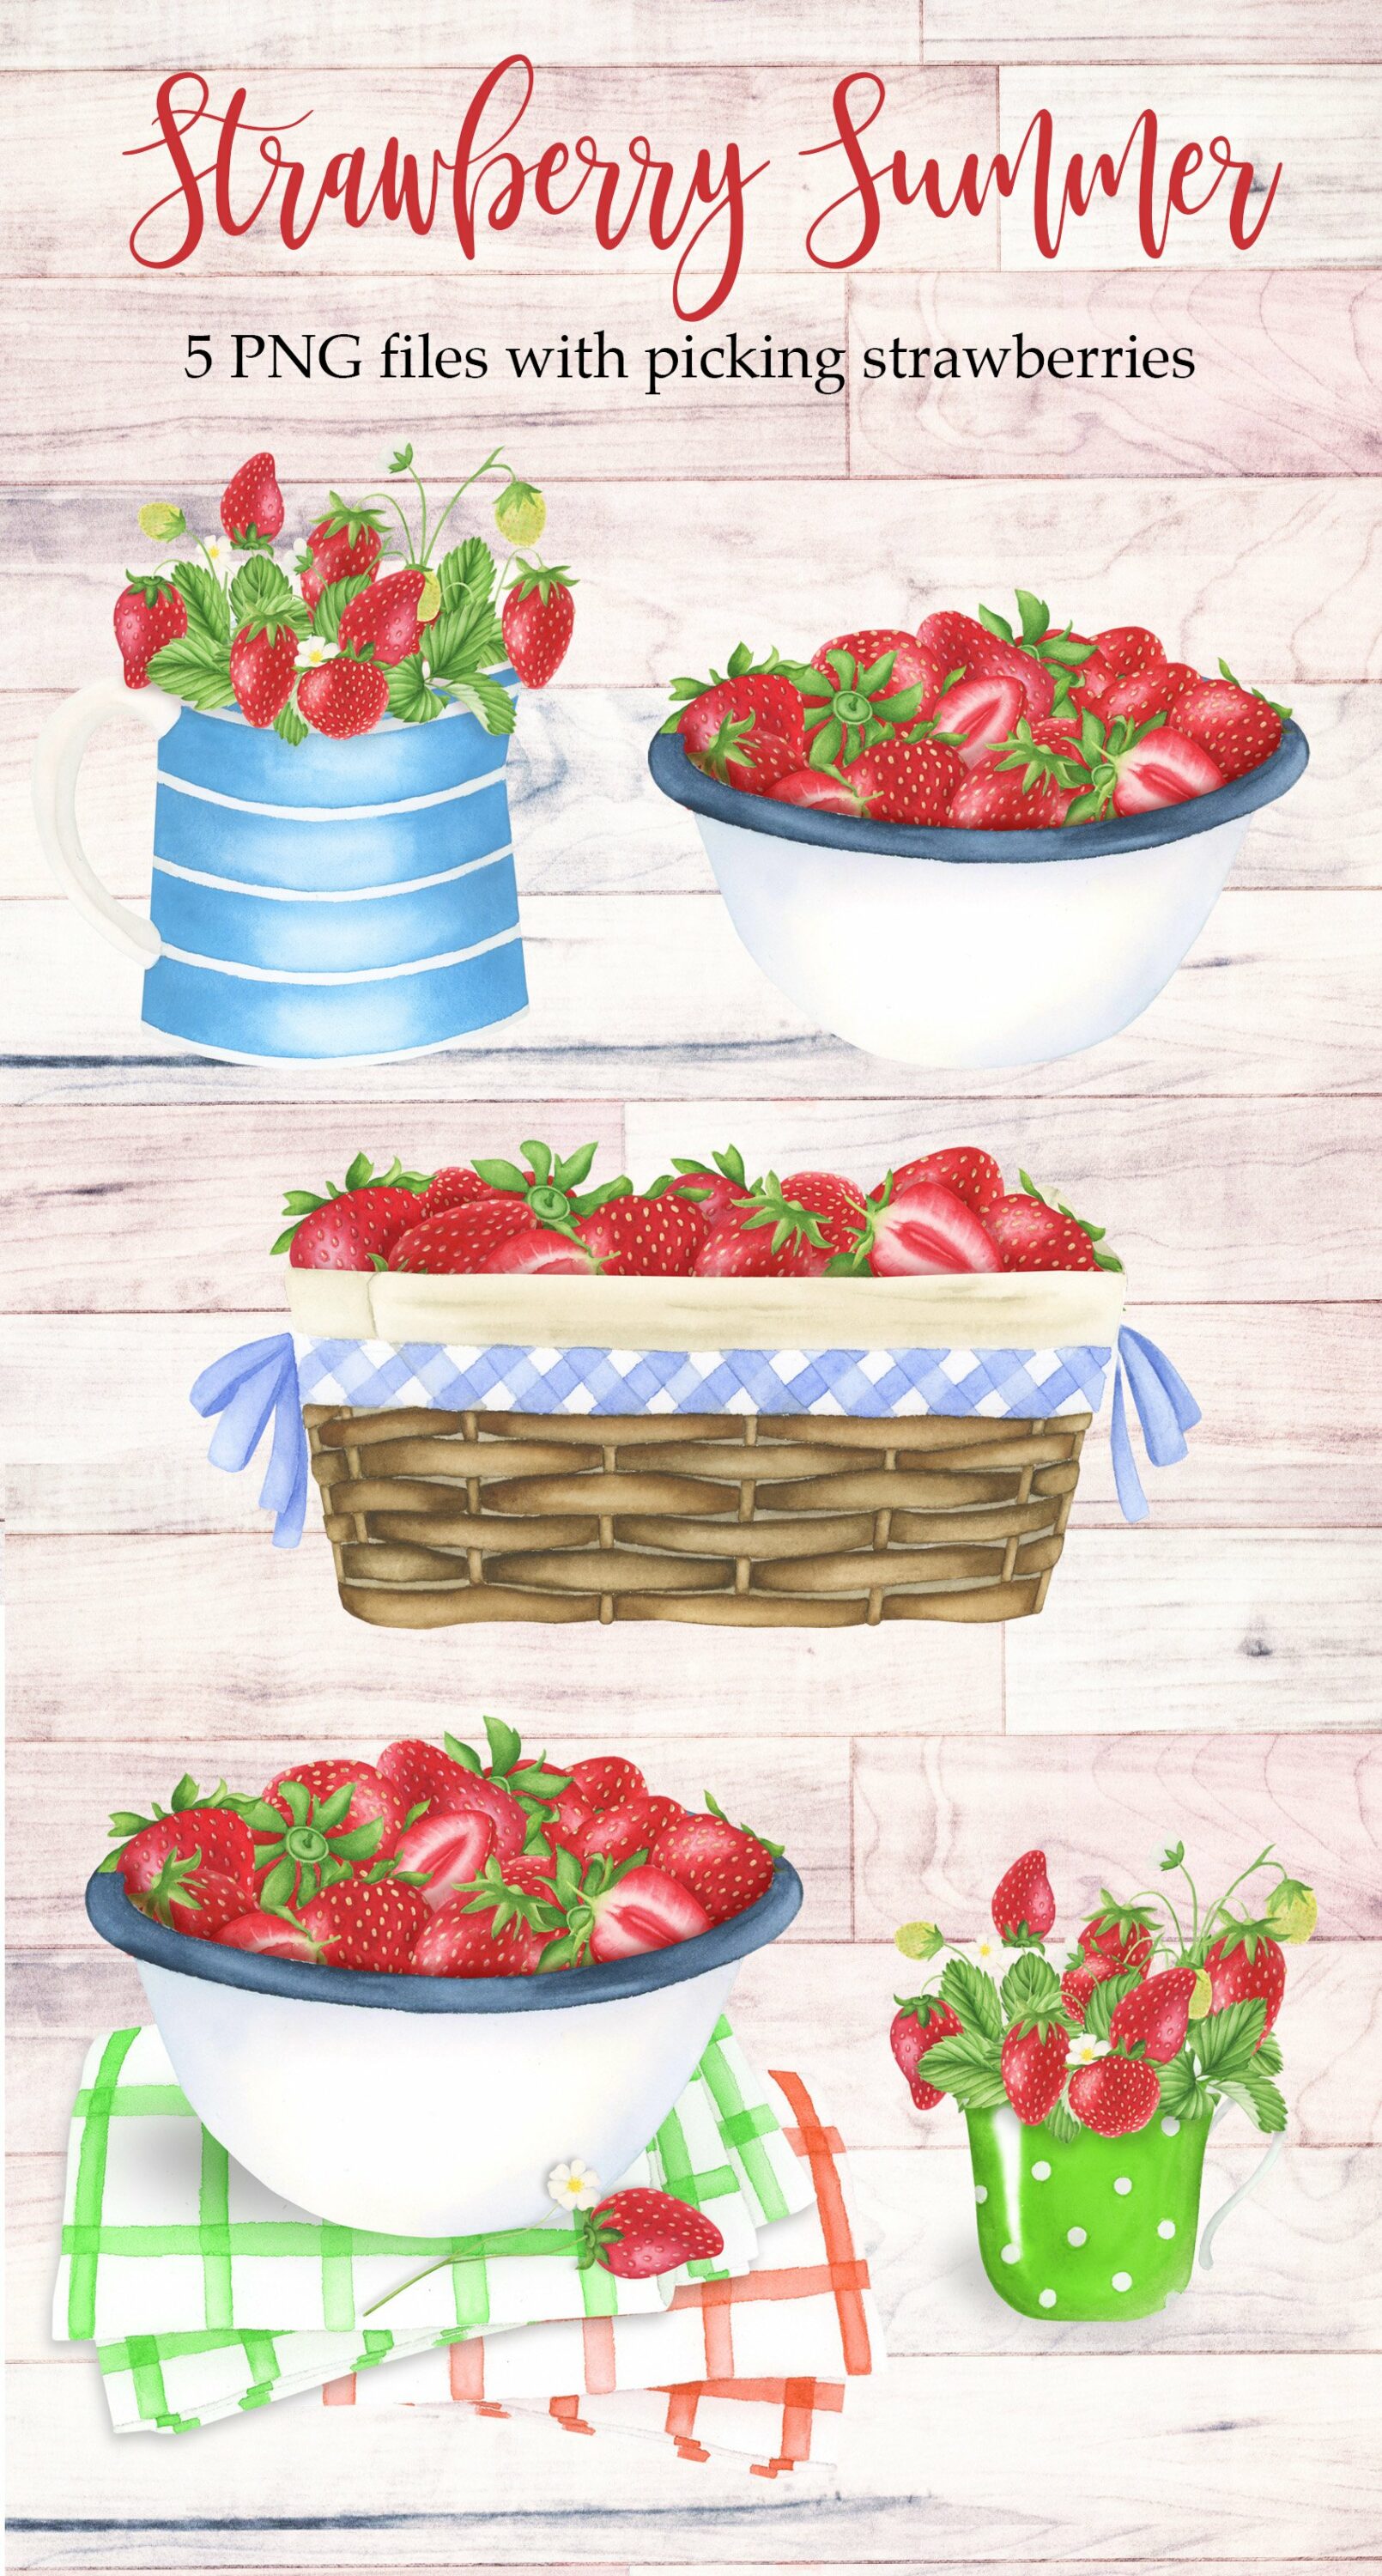 So tasty strawberries from the garden.